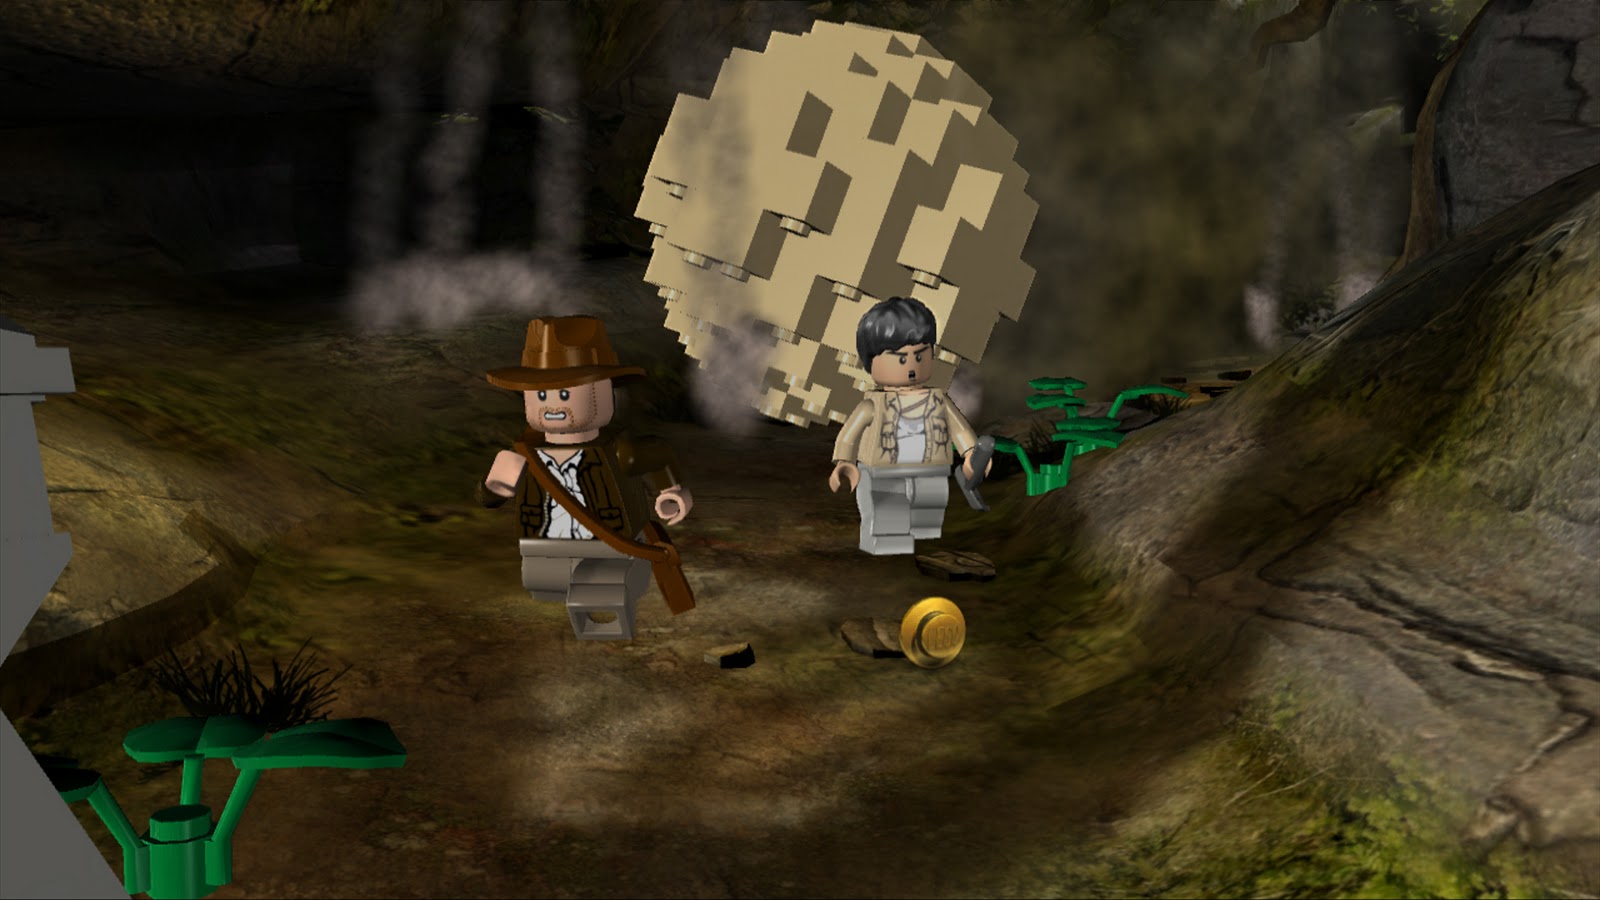 Lego Indiana Jones: The Original Adventures - GameSpot